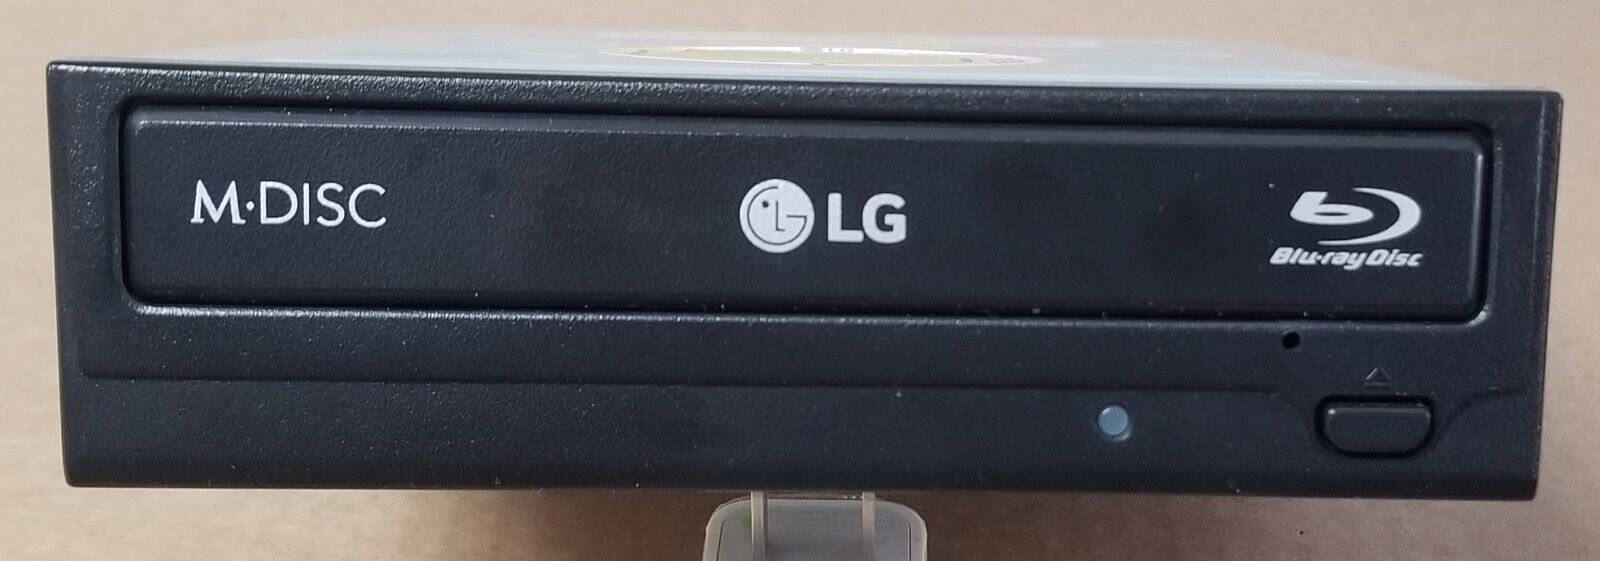 UHD Friendly LG WH14NS40 Blu-Ray Drive Flashed to WH16NS60 v1.02 NO SLEEP BUG